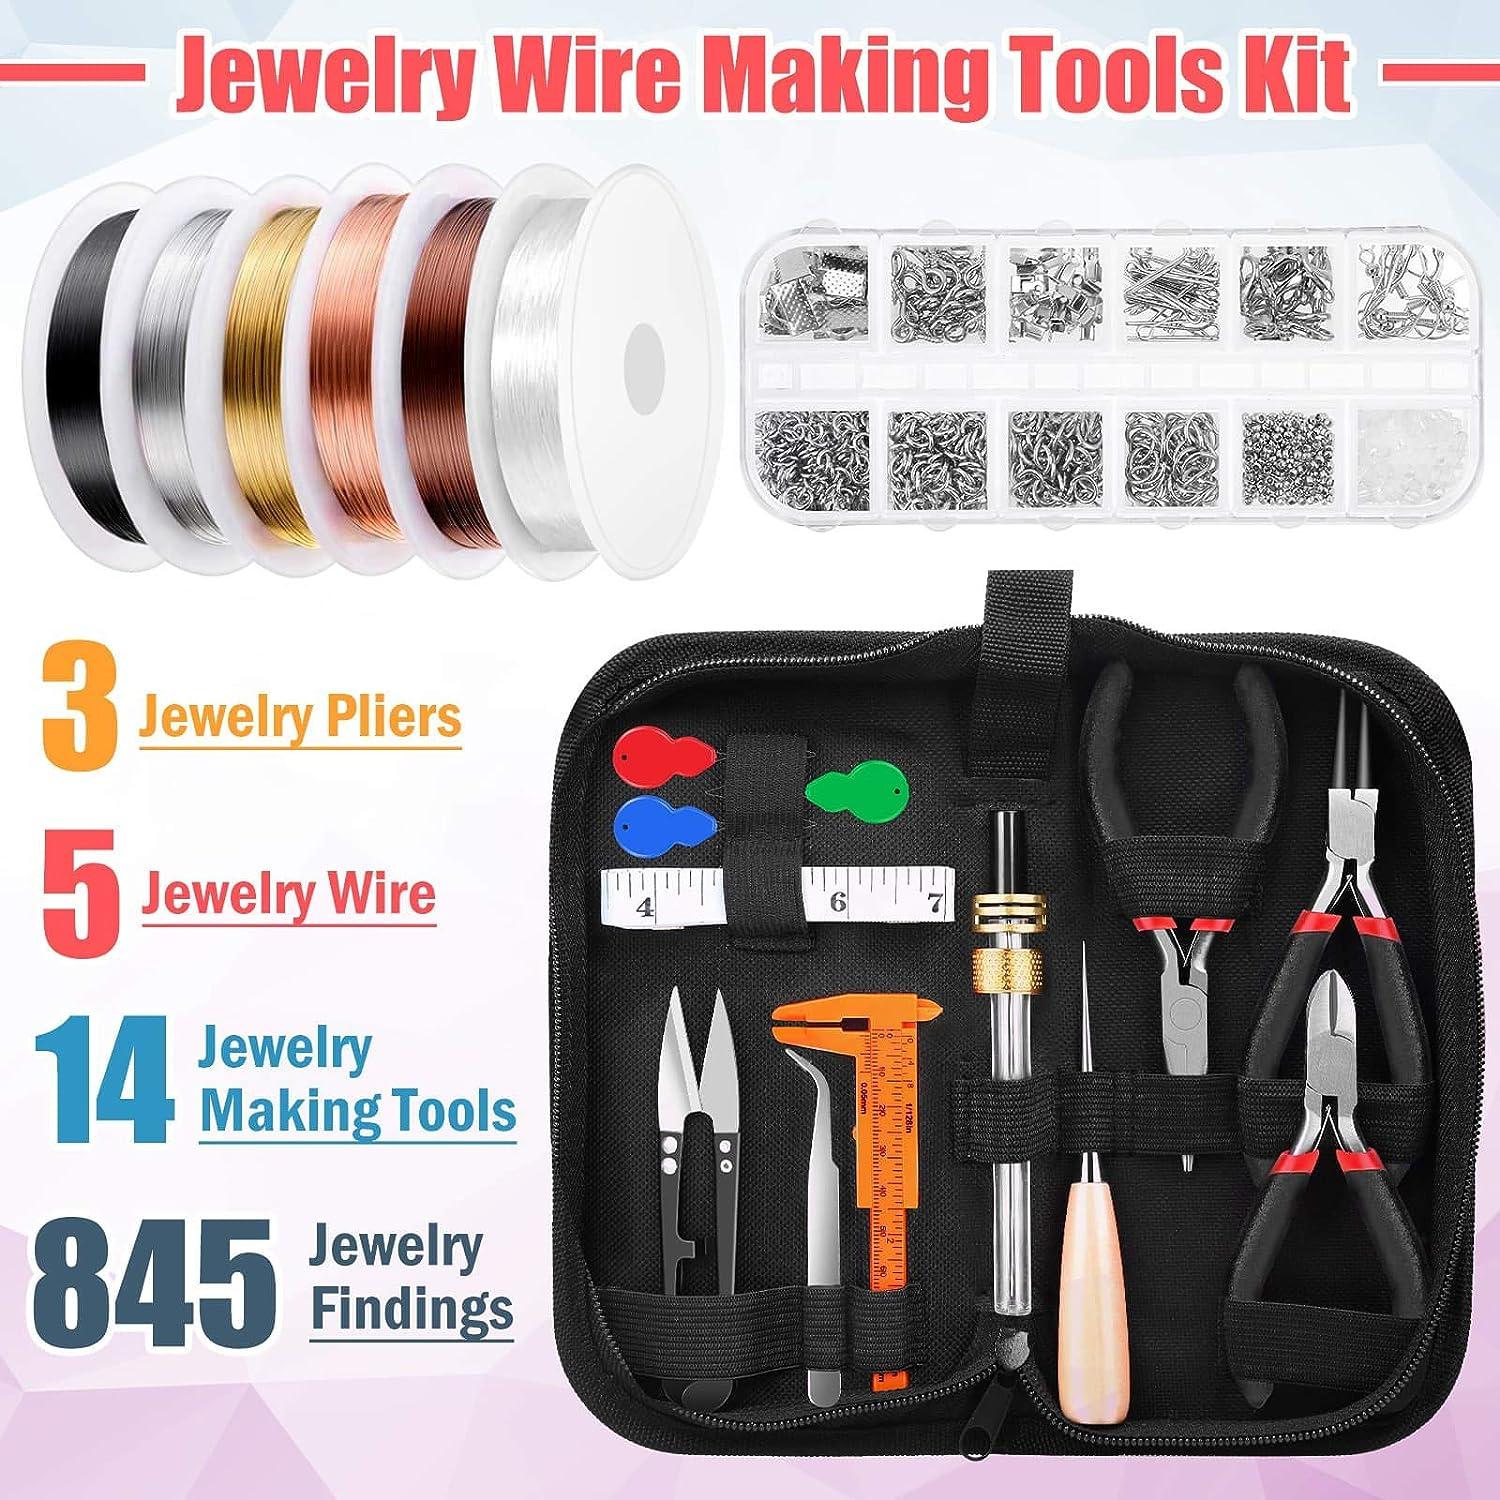  PAXCOO Jewelry Making Supplies Kit, Jewelry Making Kit with  Jewelry Making Tools, Jewelry Wires and Jewelry Findings for Jewelry  Making, Repair and Beading